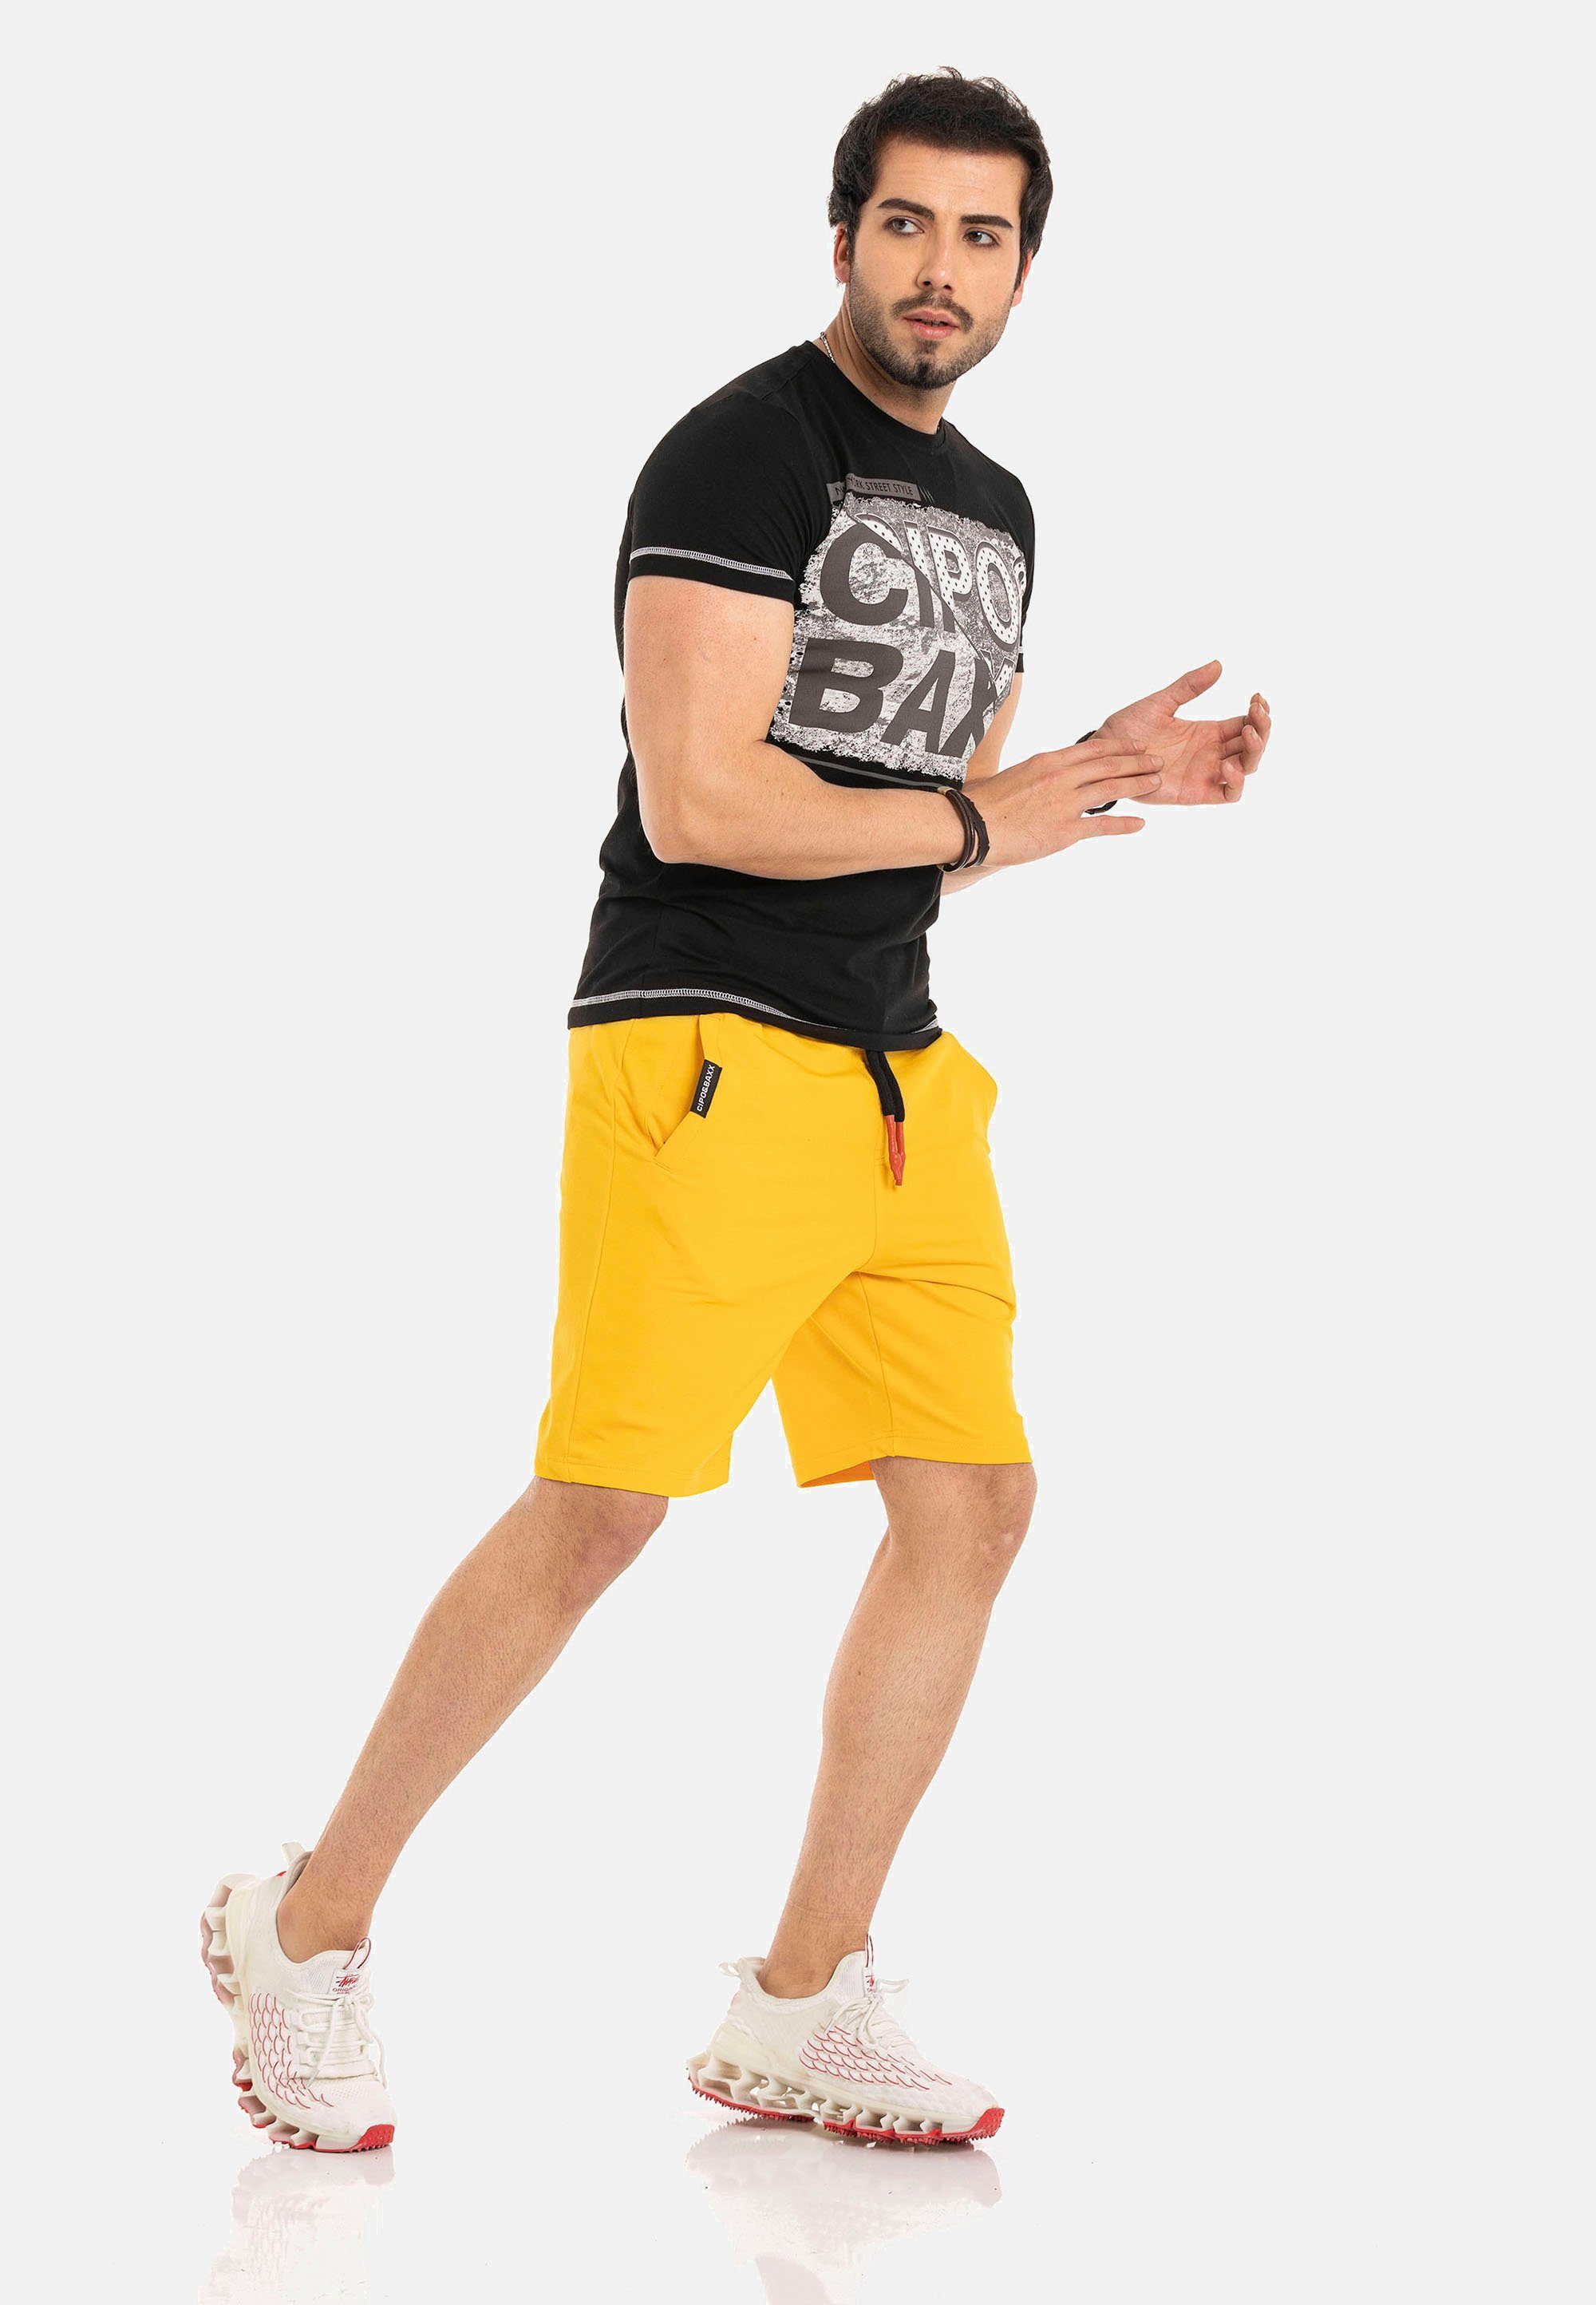 Cipo & Baxx Shorts Look gelb in sportlichem